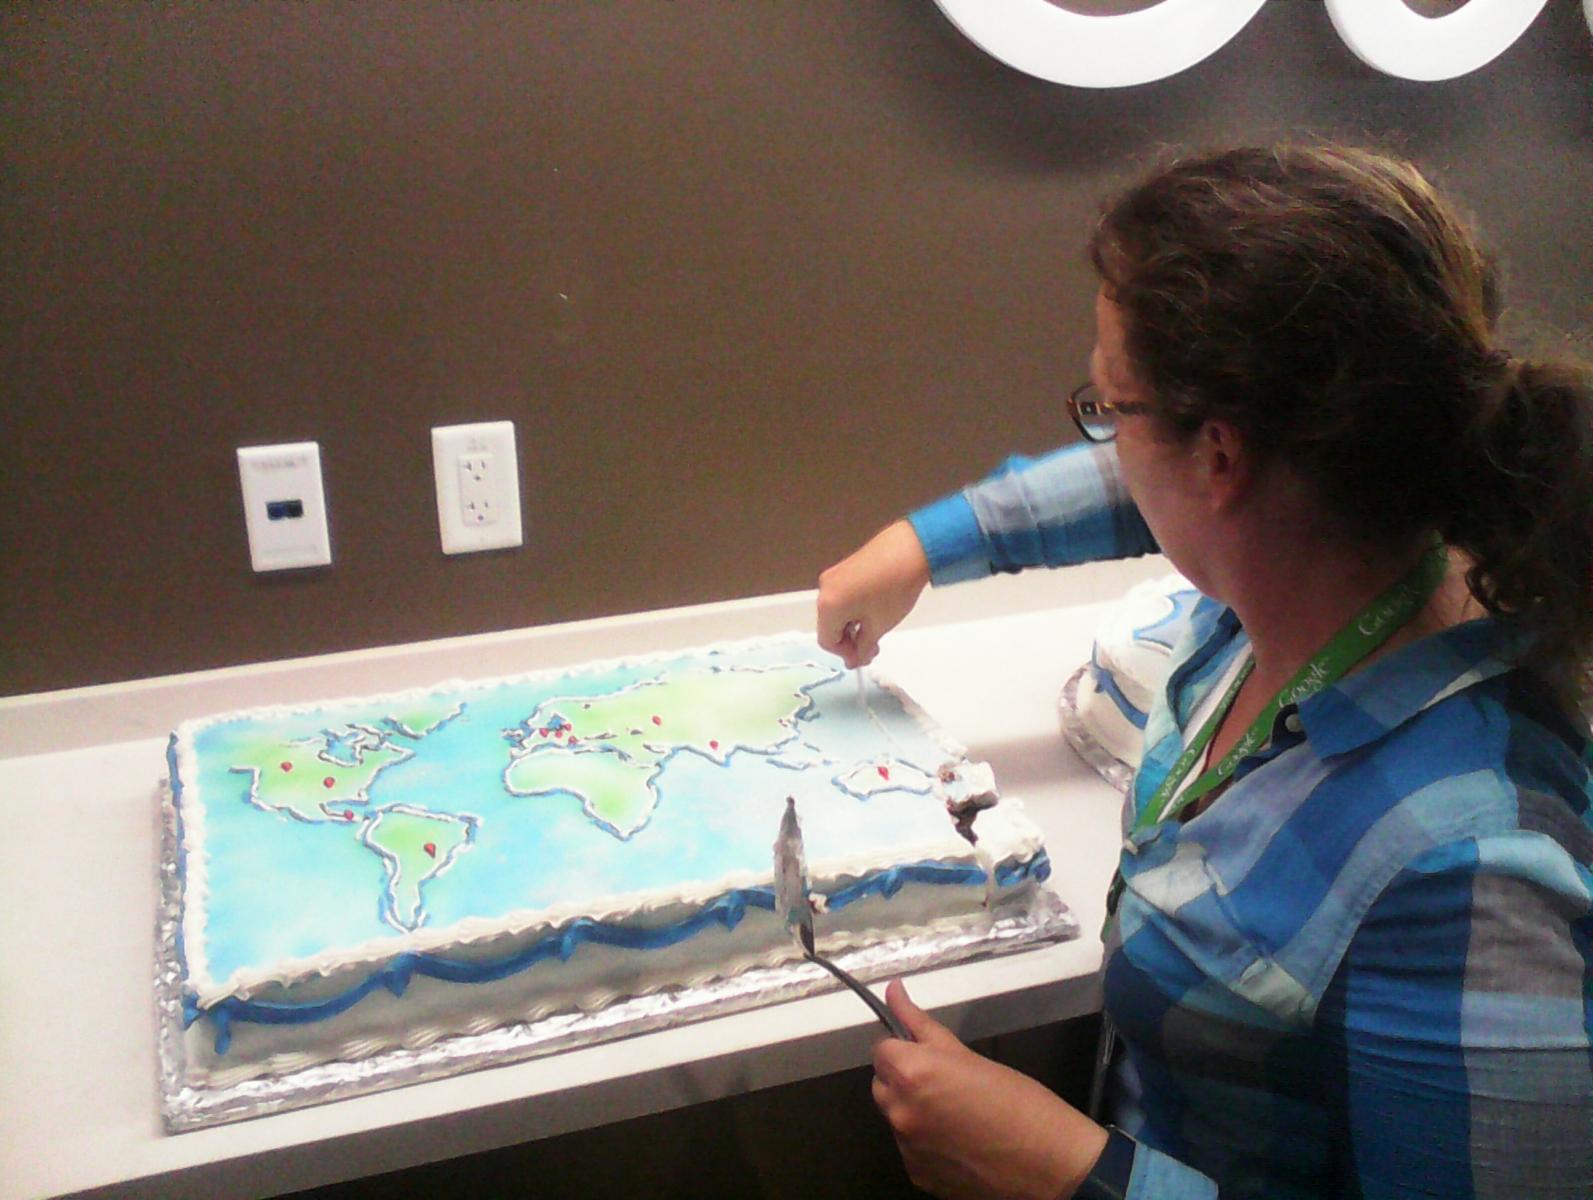 Stephanie cutting the map cake